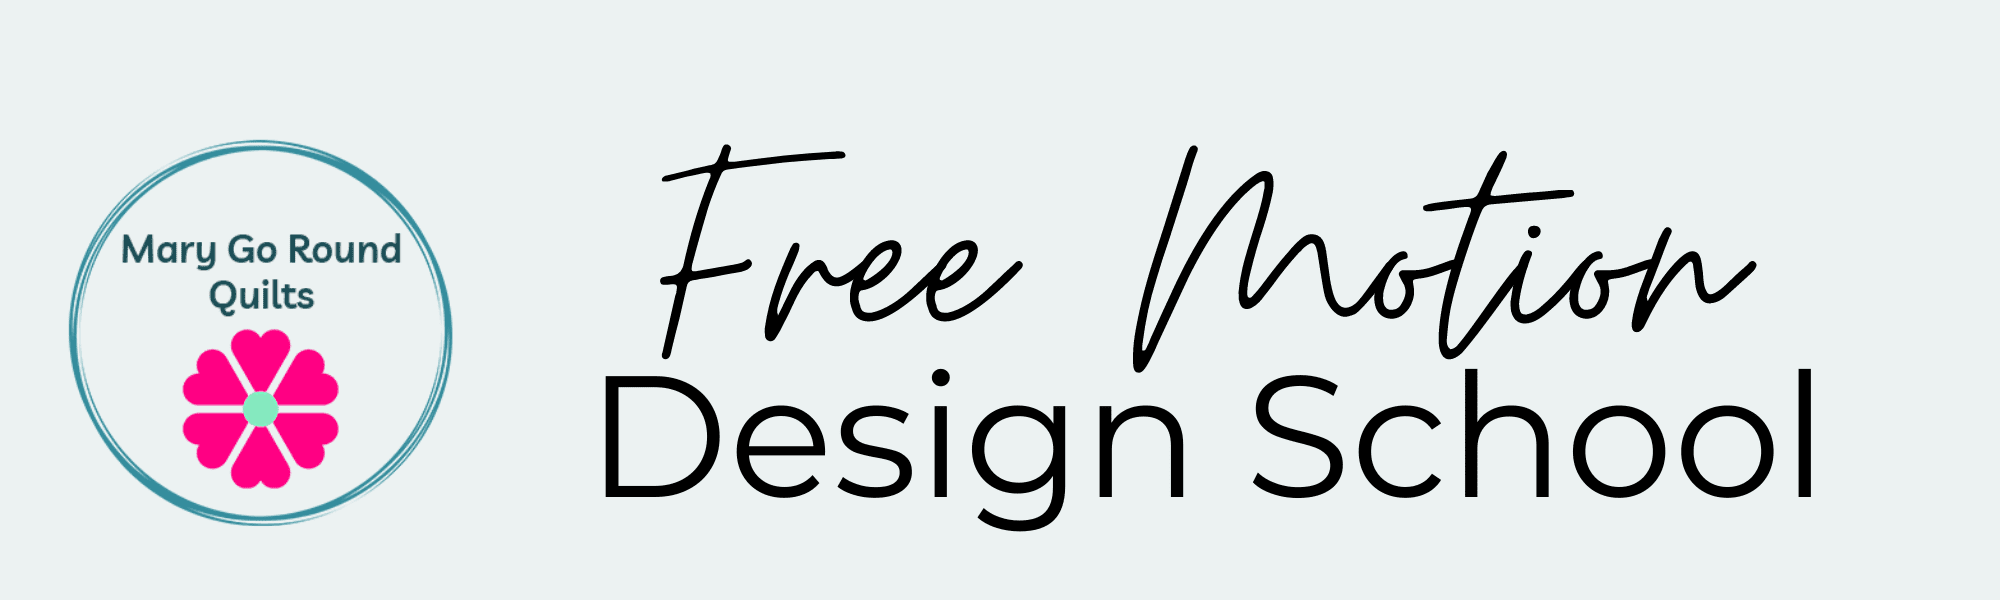 Free nation design school logo.